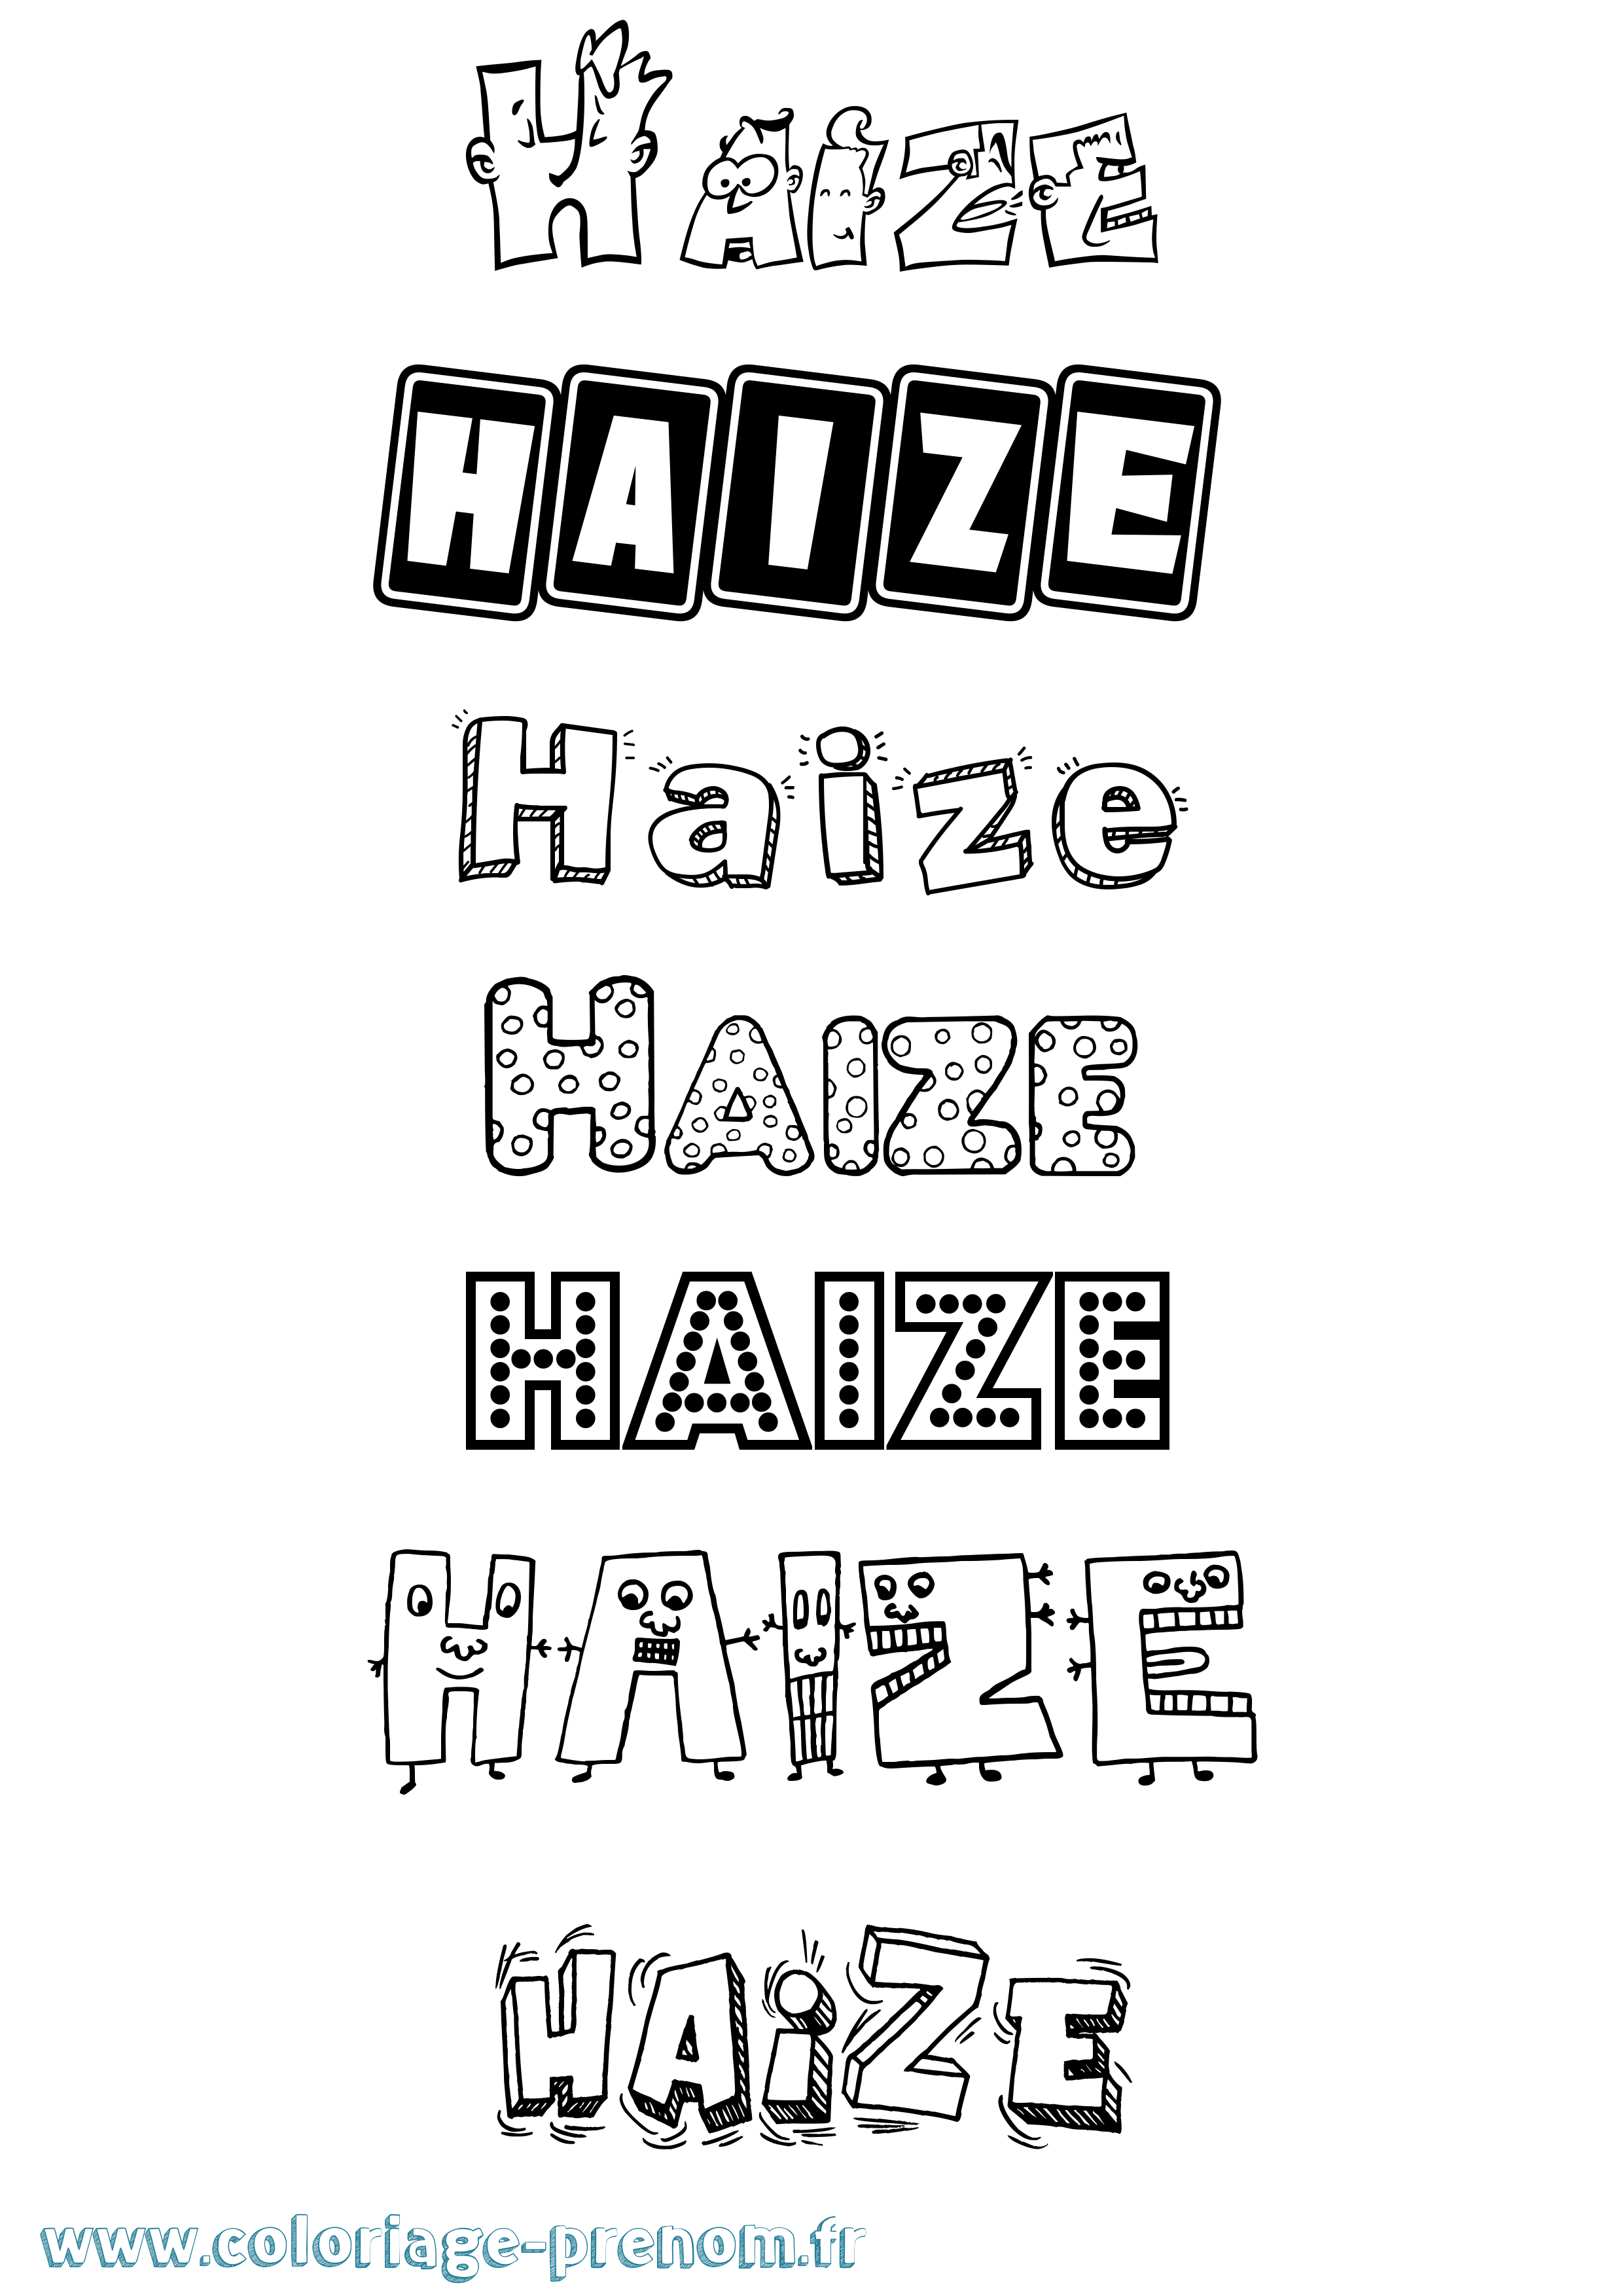 Coloriage prénom Haize Fun